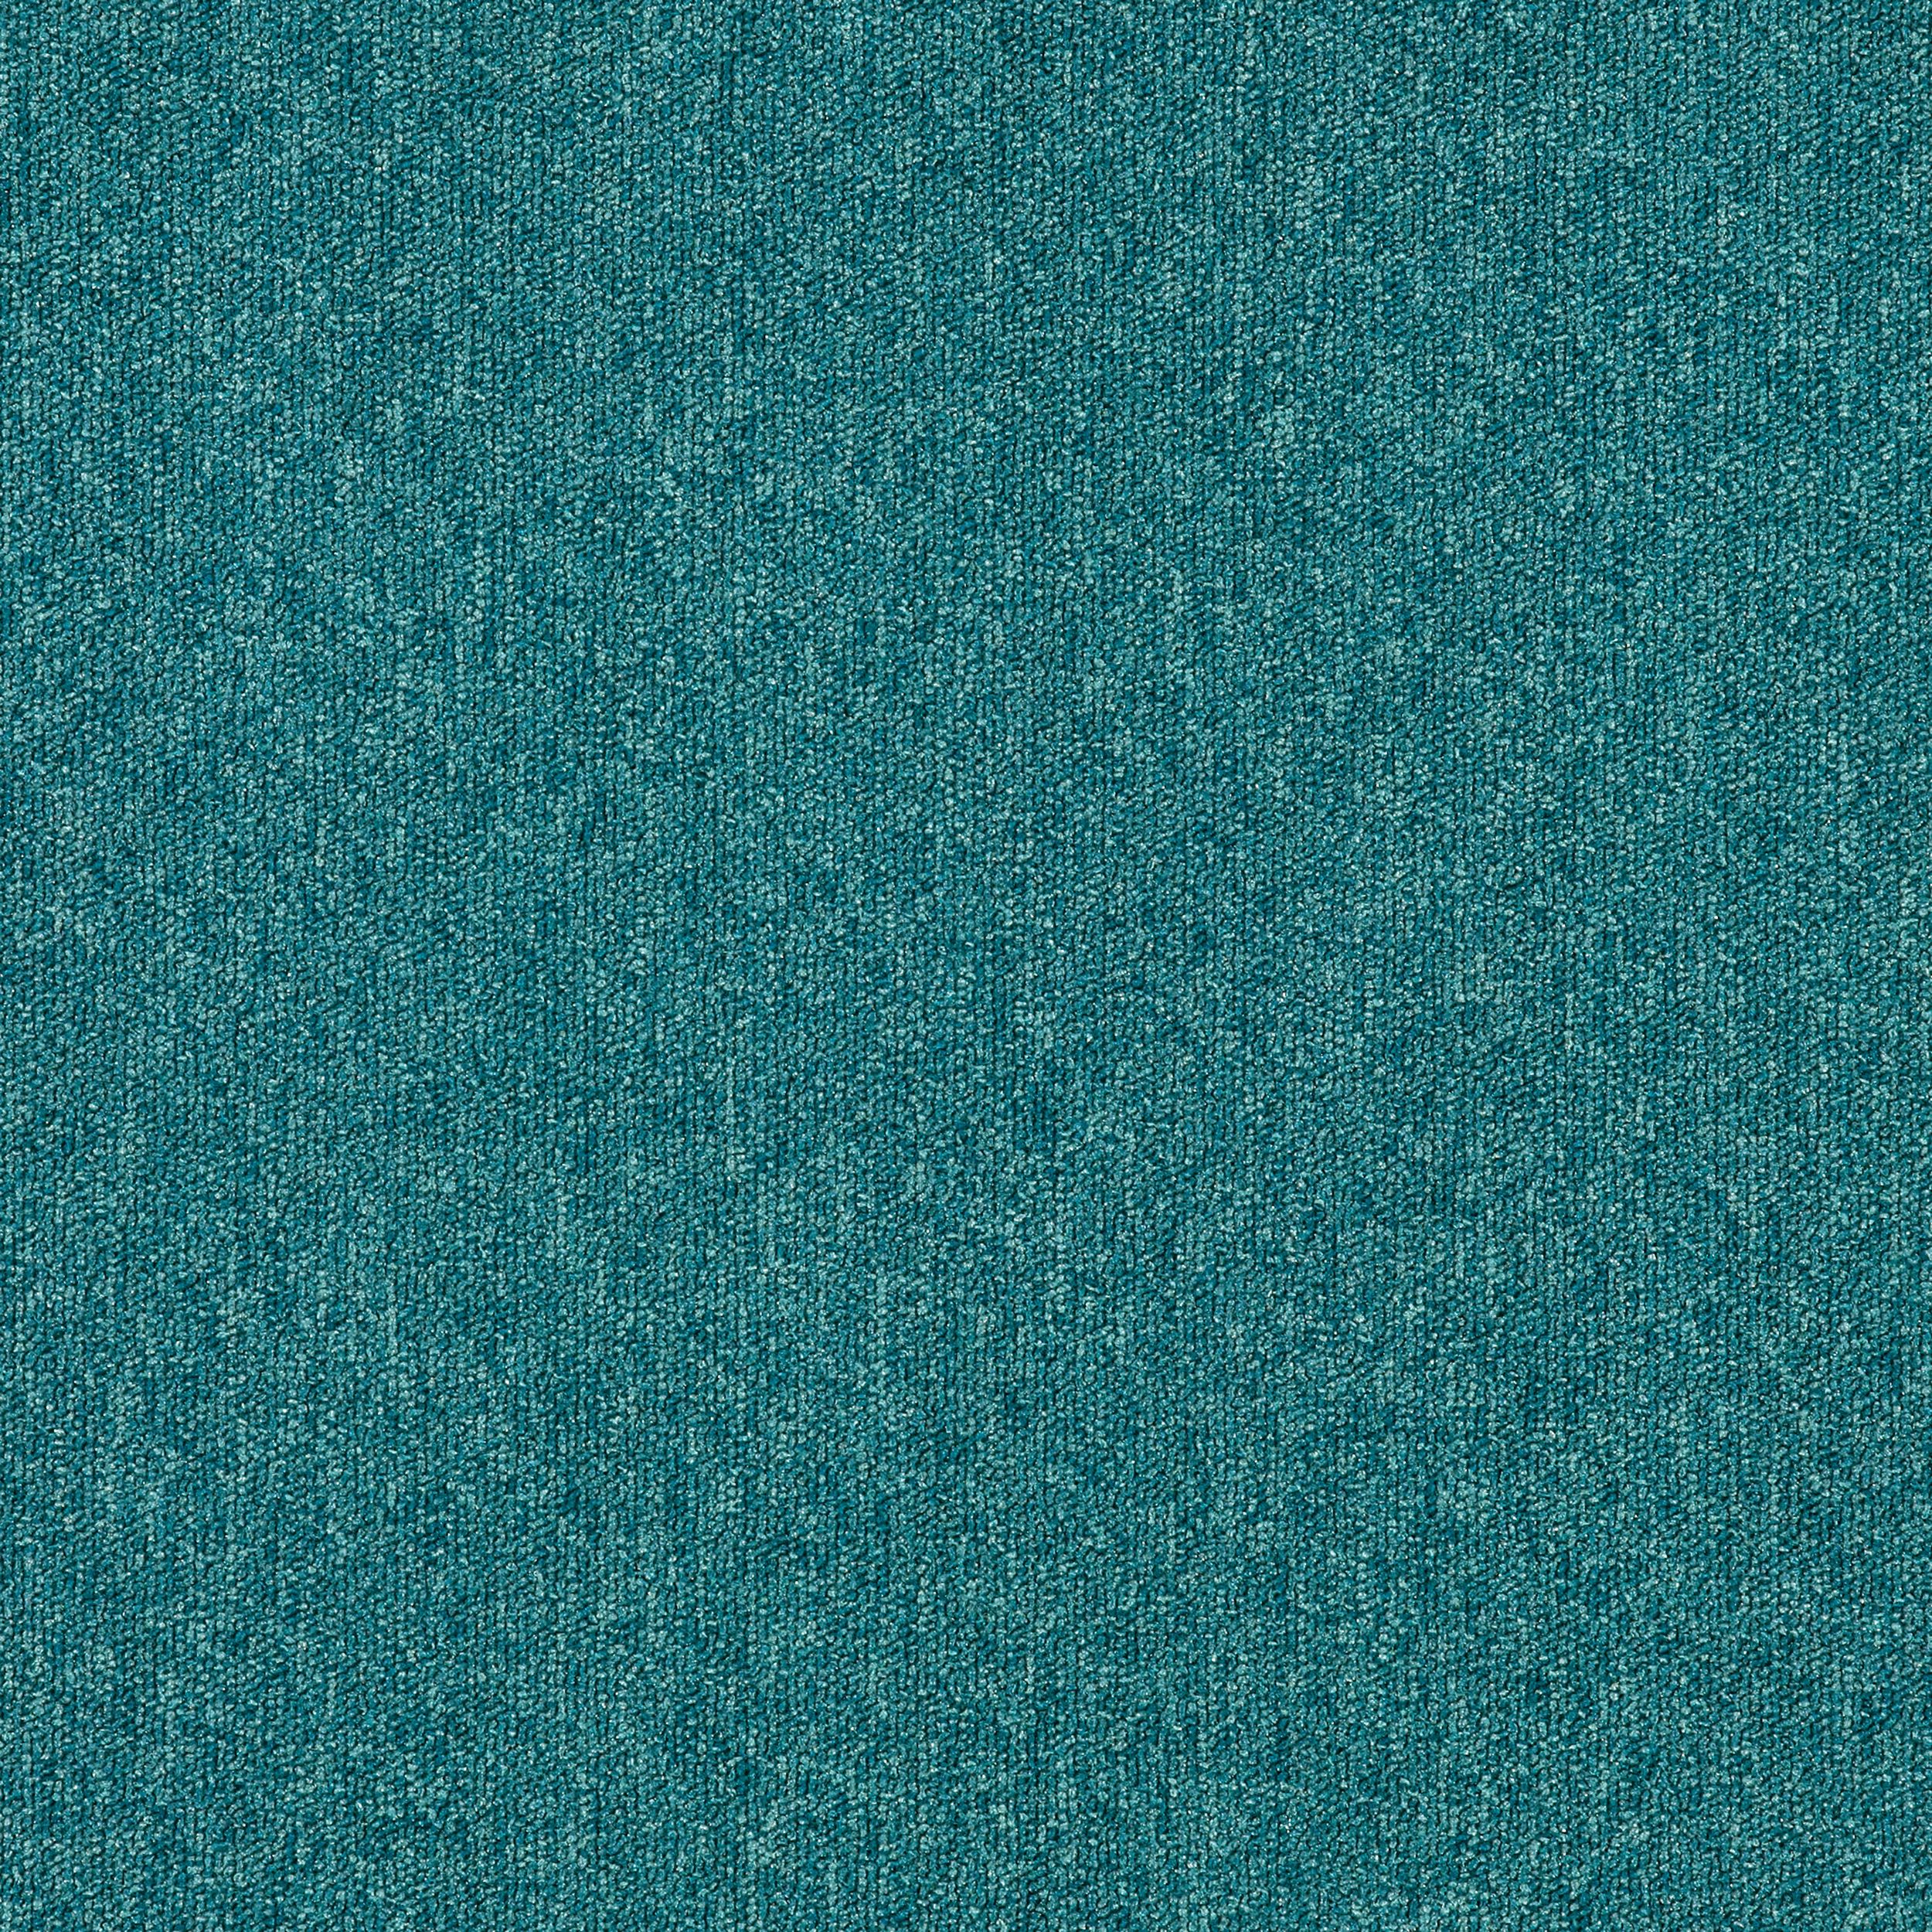 Heuga 580 II carpet tile in Reef Bildnummer 2